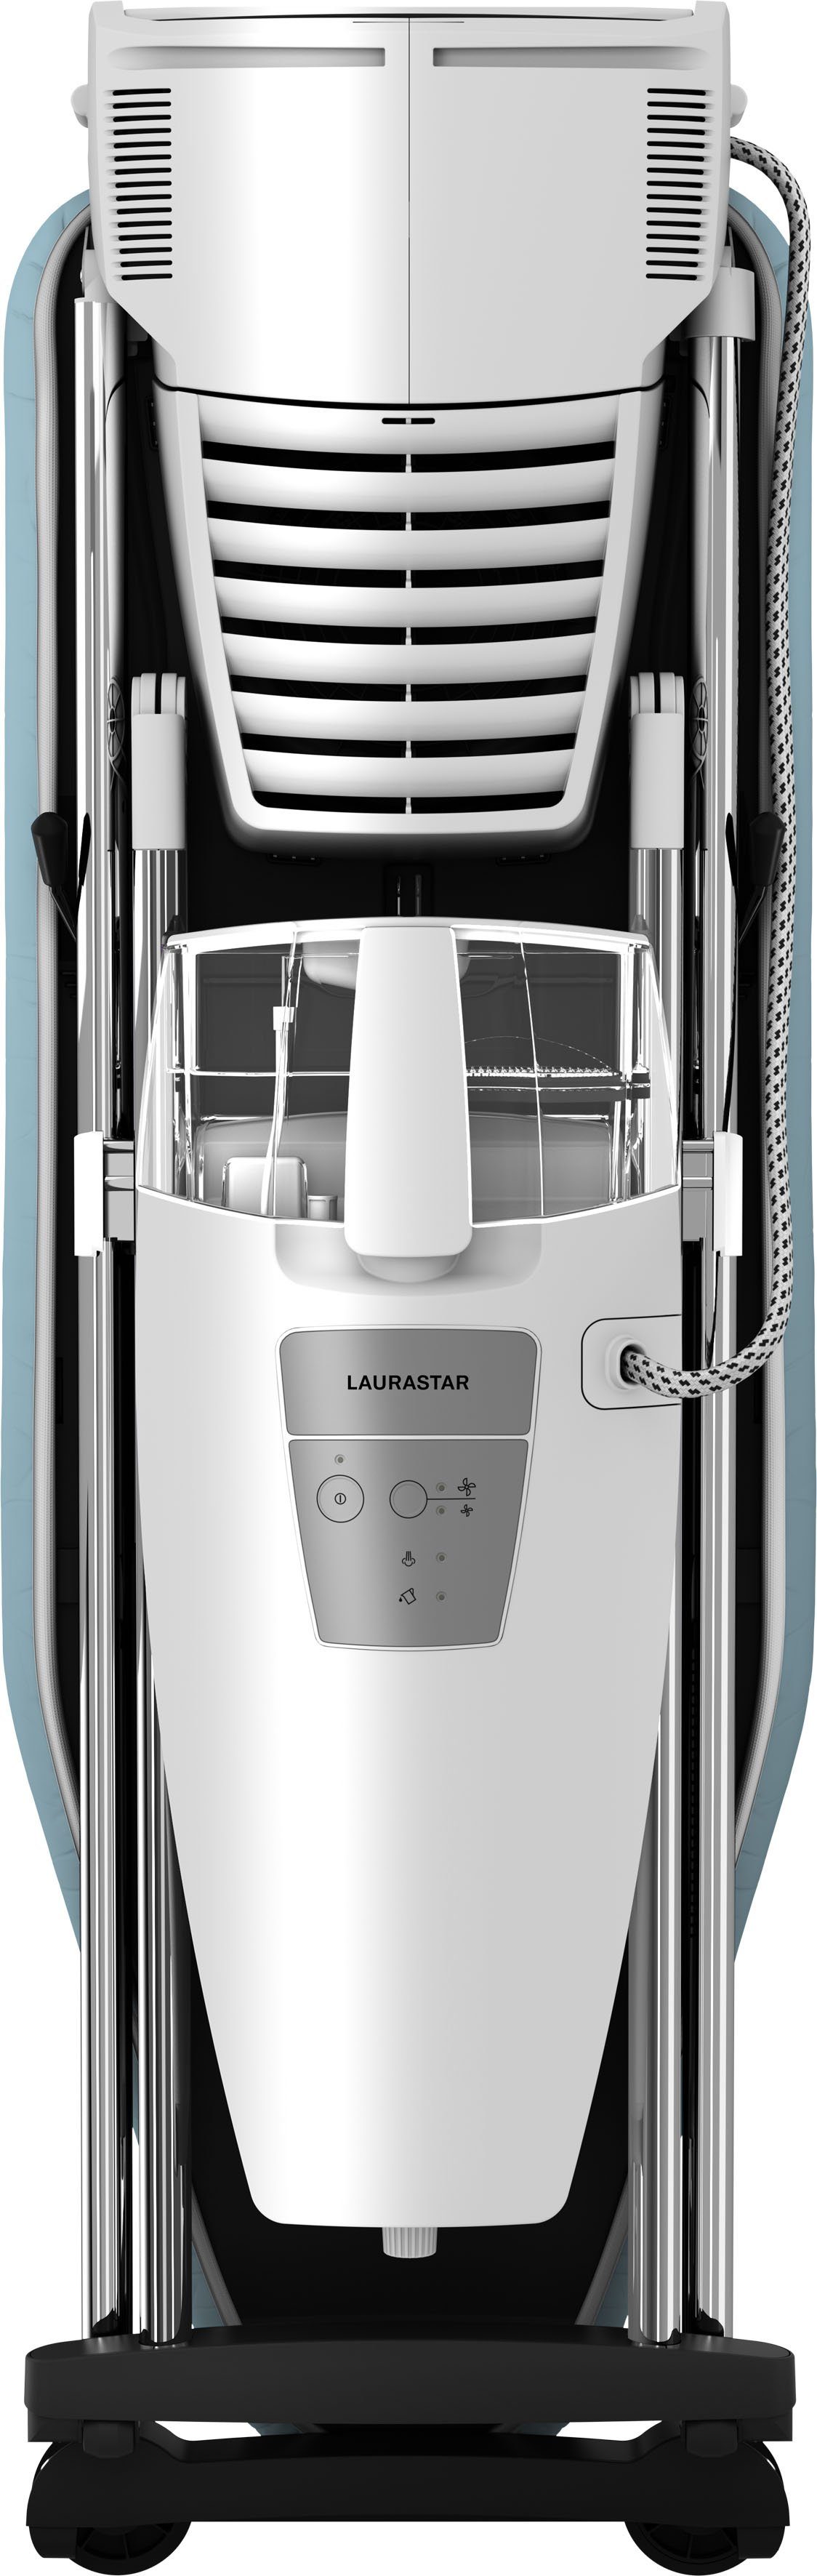 LAURASTAR Bügelsystem S Pure 2200 + Xtremecover, W